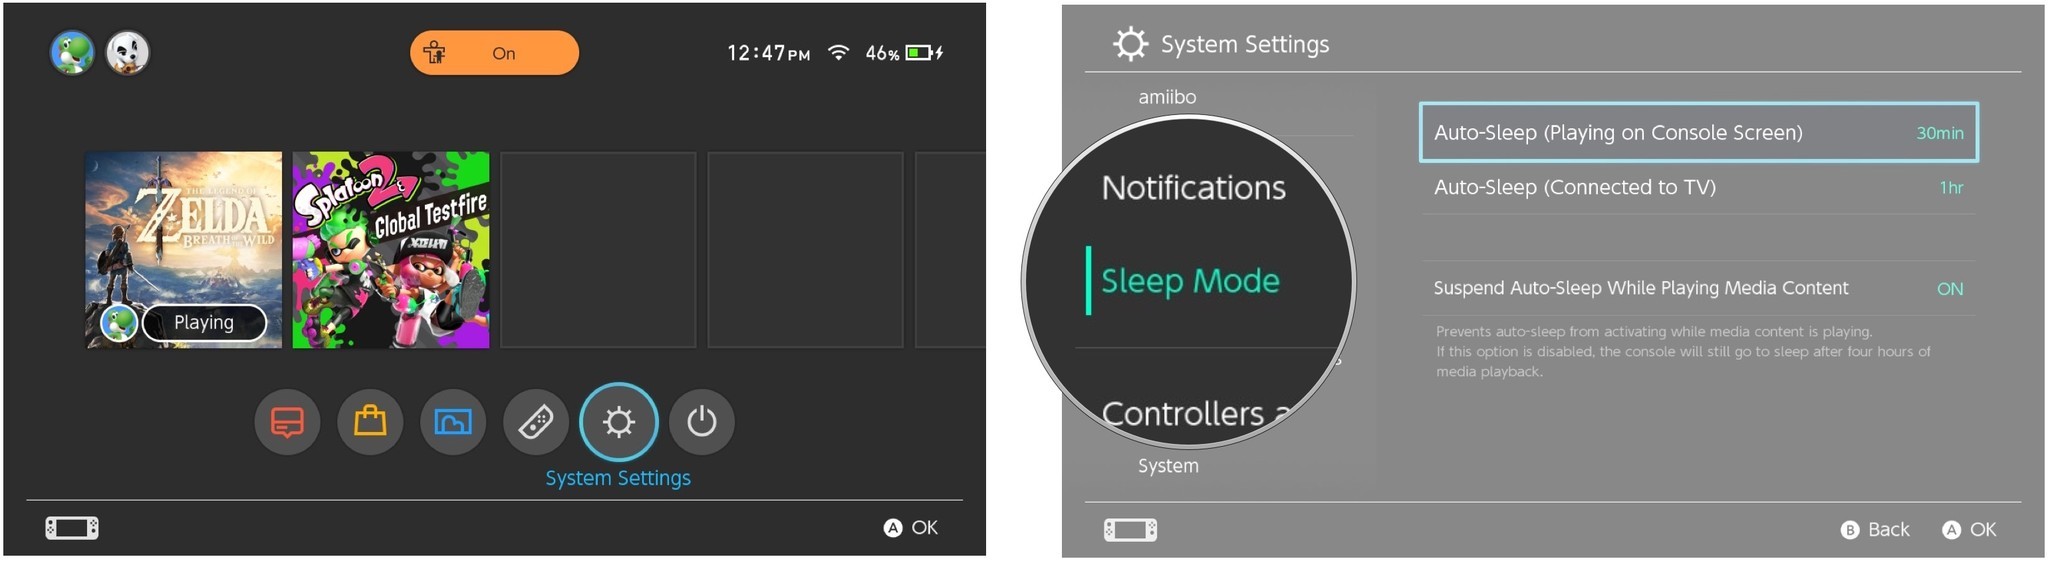 Select System Settings, then select Sleep Mode